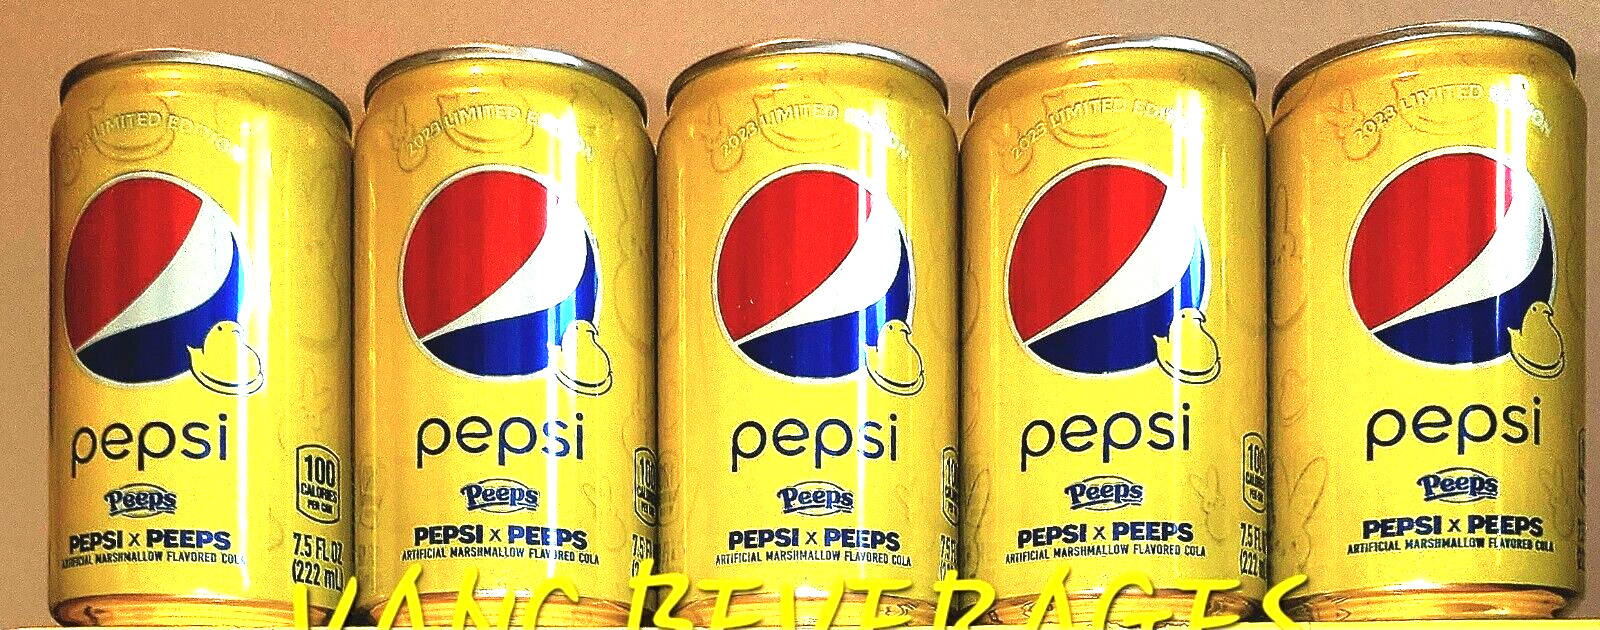 Pepsi PEEPS flavored minis 5 x 7.5oz SINGLE CANS  w/Free SHIP READ DESC